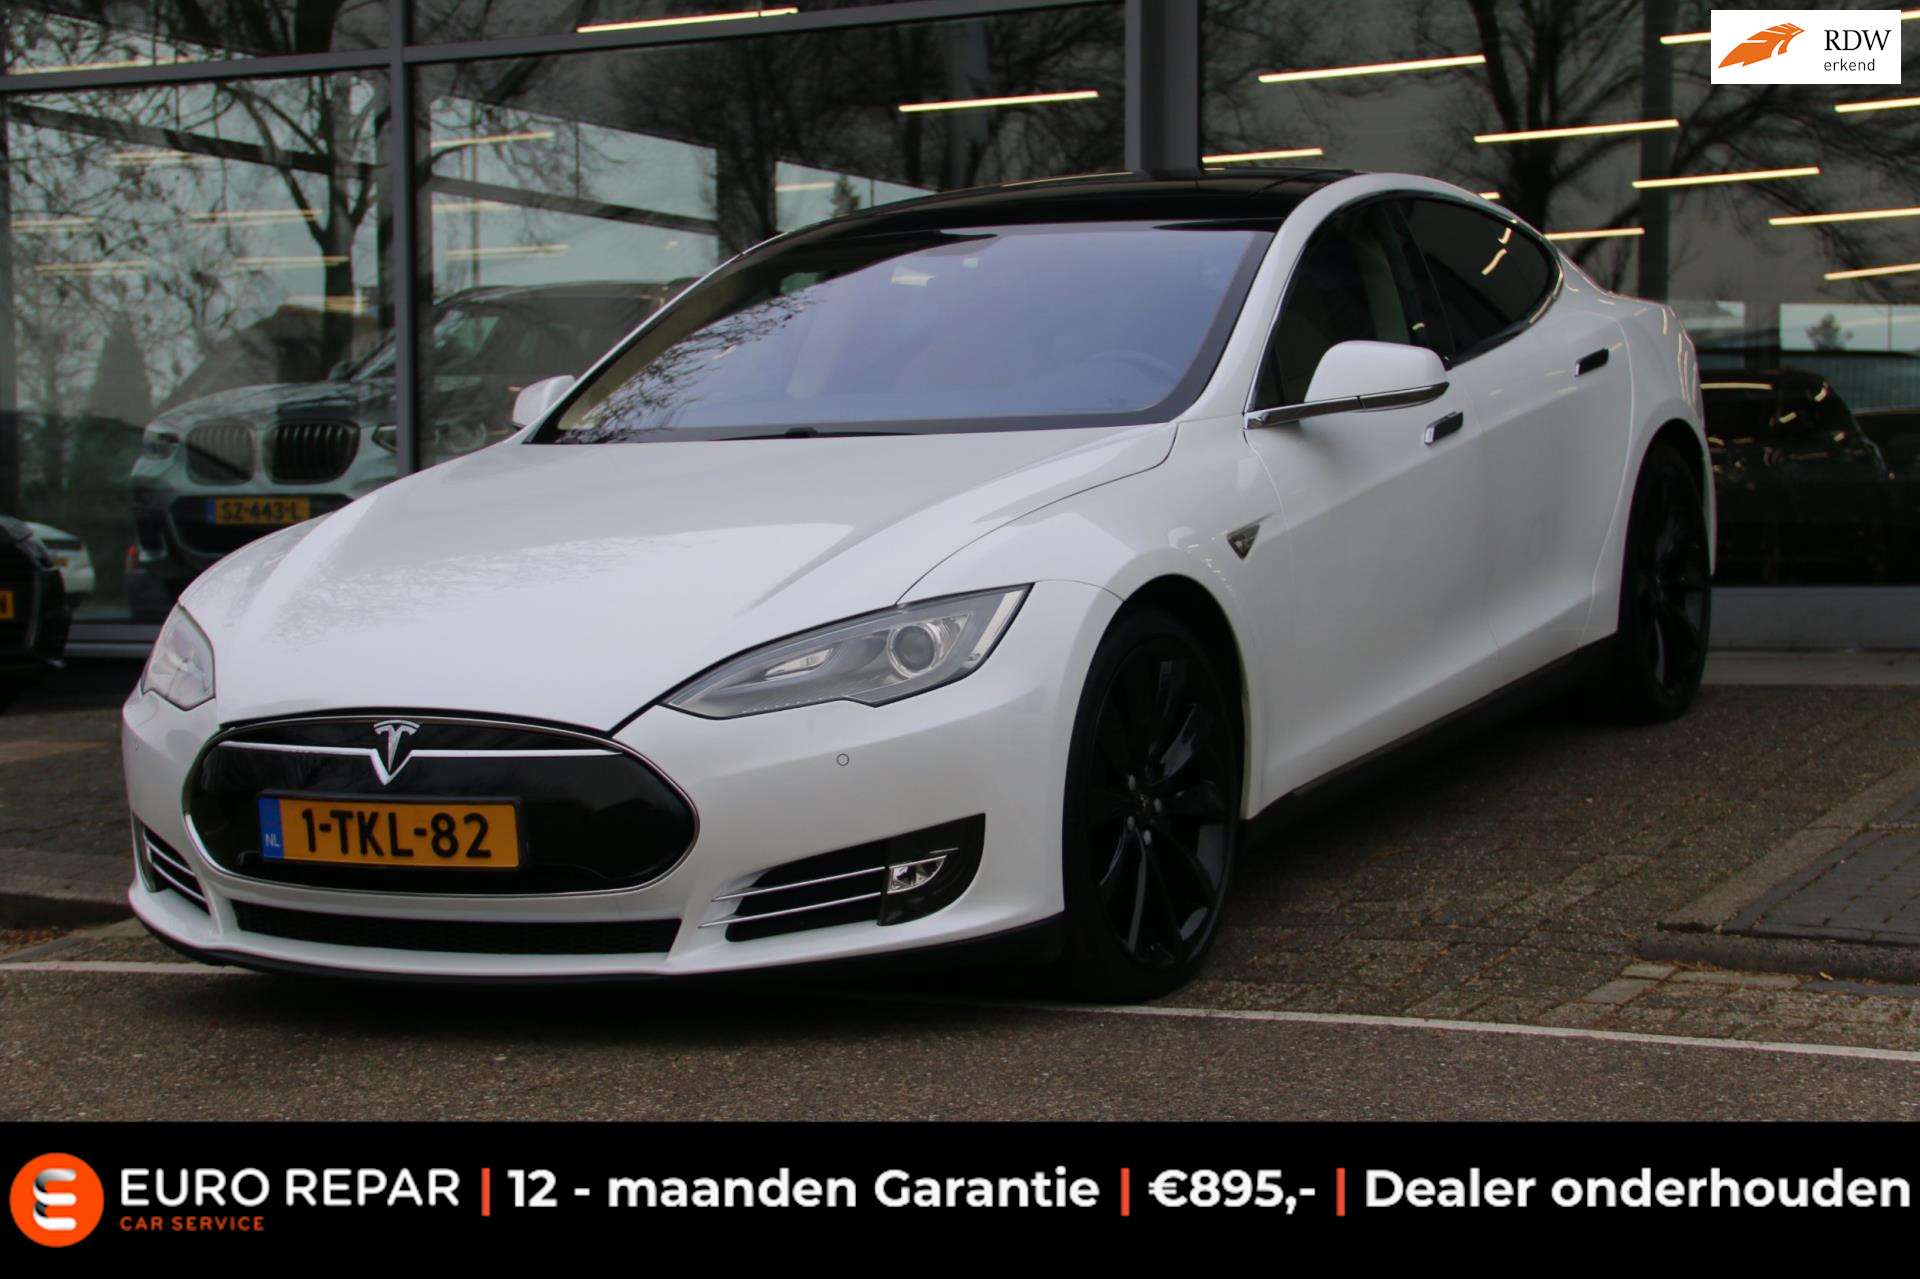 Tesla Model S Compact in White used in BOSKOOP for € 25,795.-